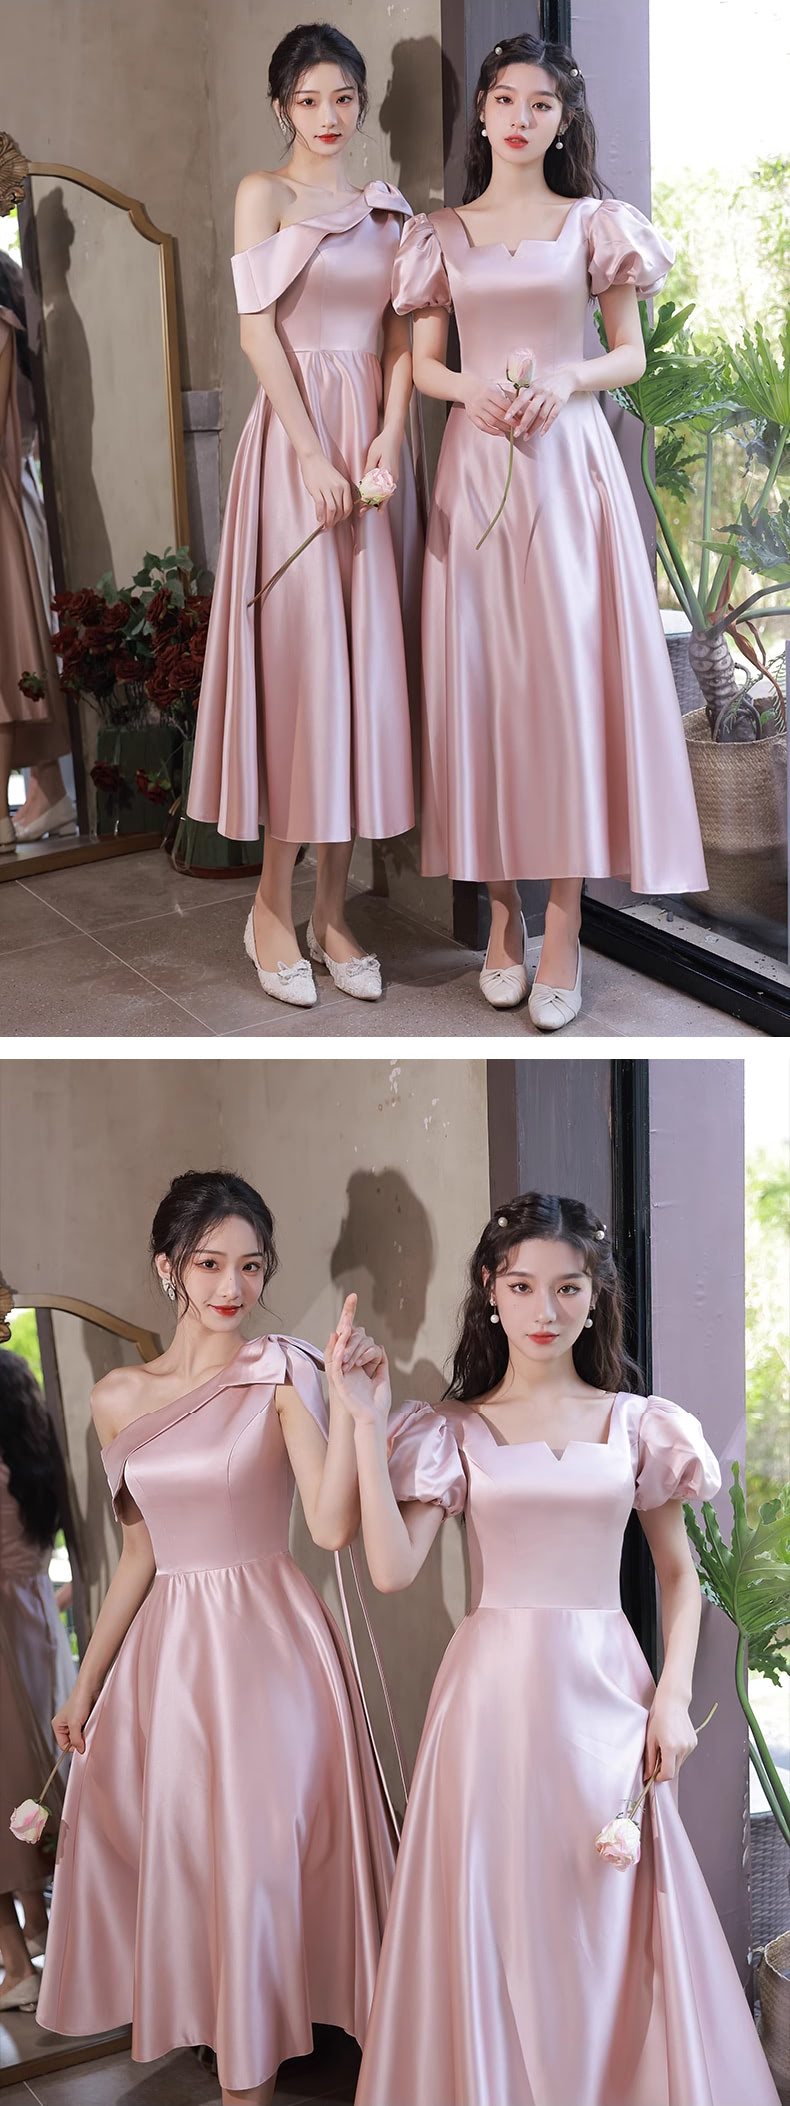 Simple-Pink-Satin-Bridesmaid-Midi-Dress-Homecoming-Graduation-Attire13